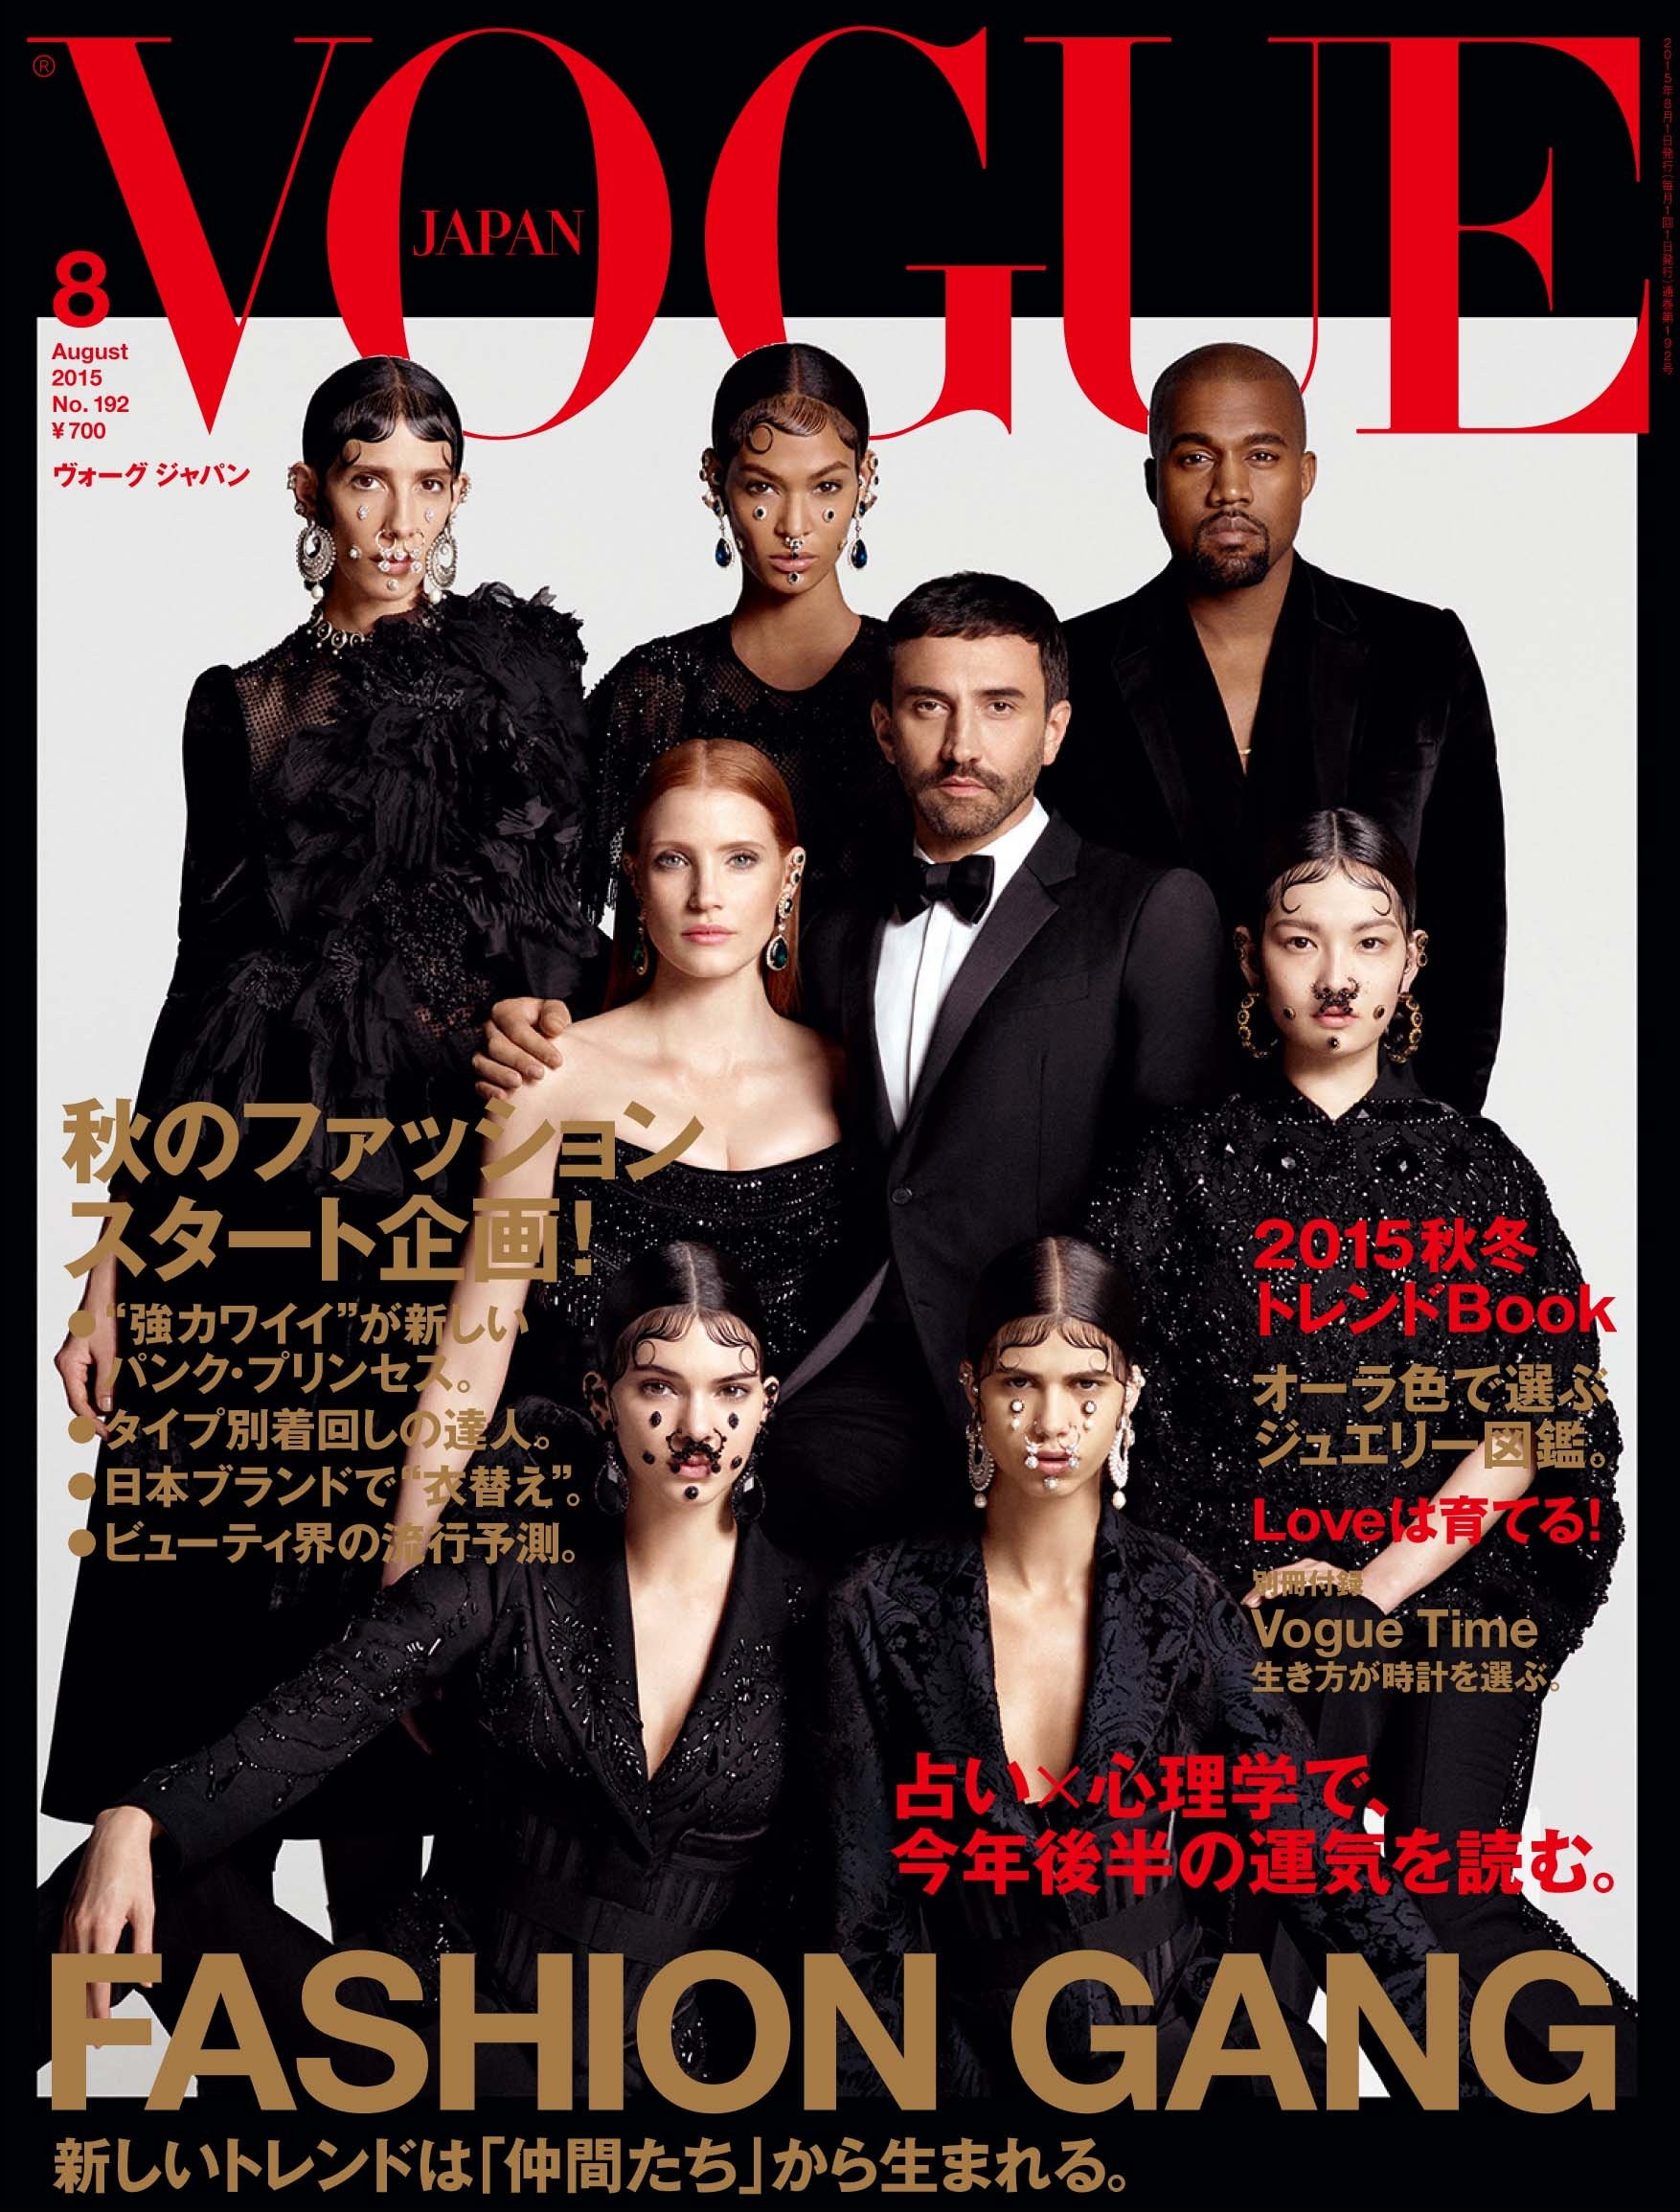 Vogue Japan August 2015 Cover Givenchy Riccardo Tisci Kanye West e1434989205898